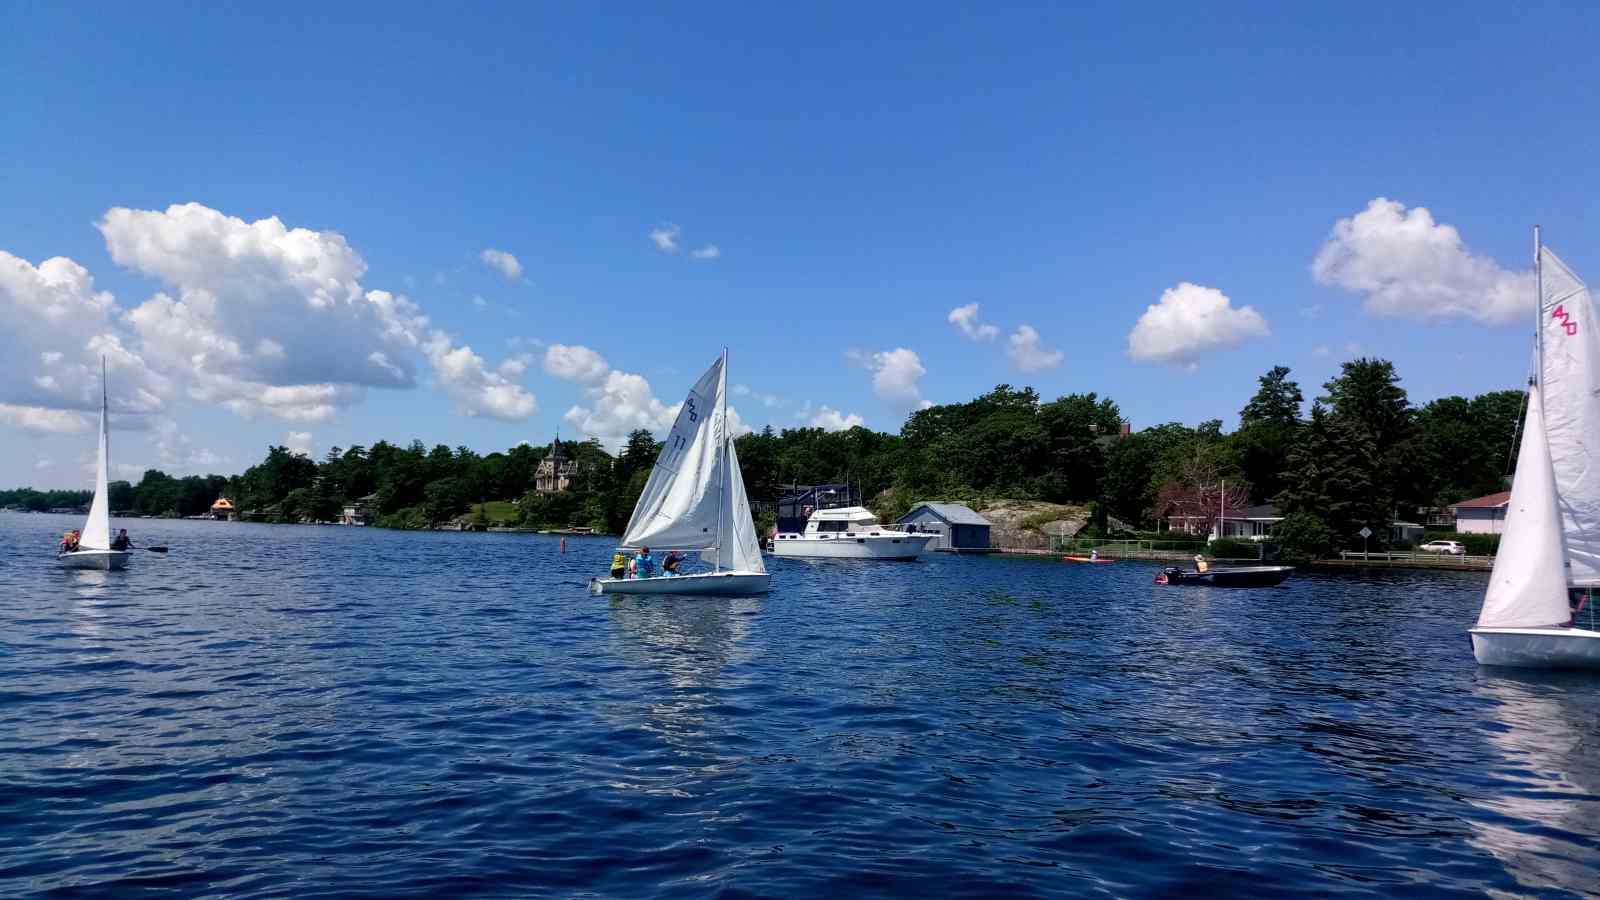 Brockville Yacht Club Sailing School 2017 club 420 1000 islands.jpg